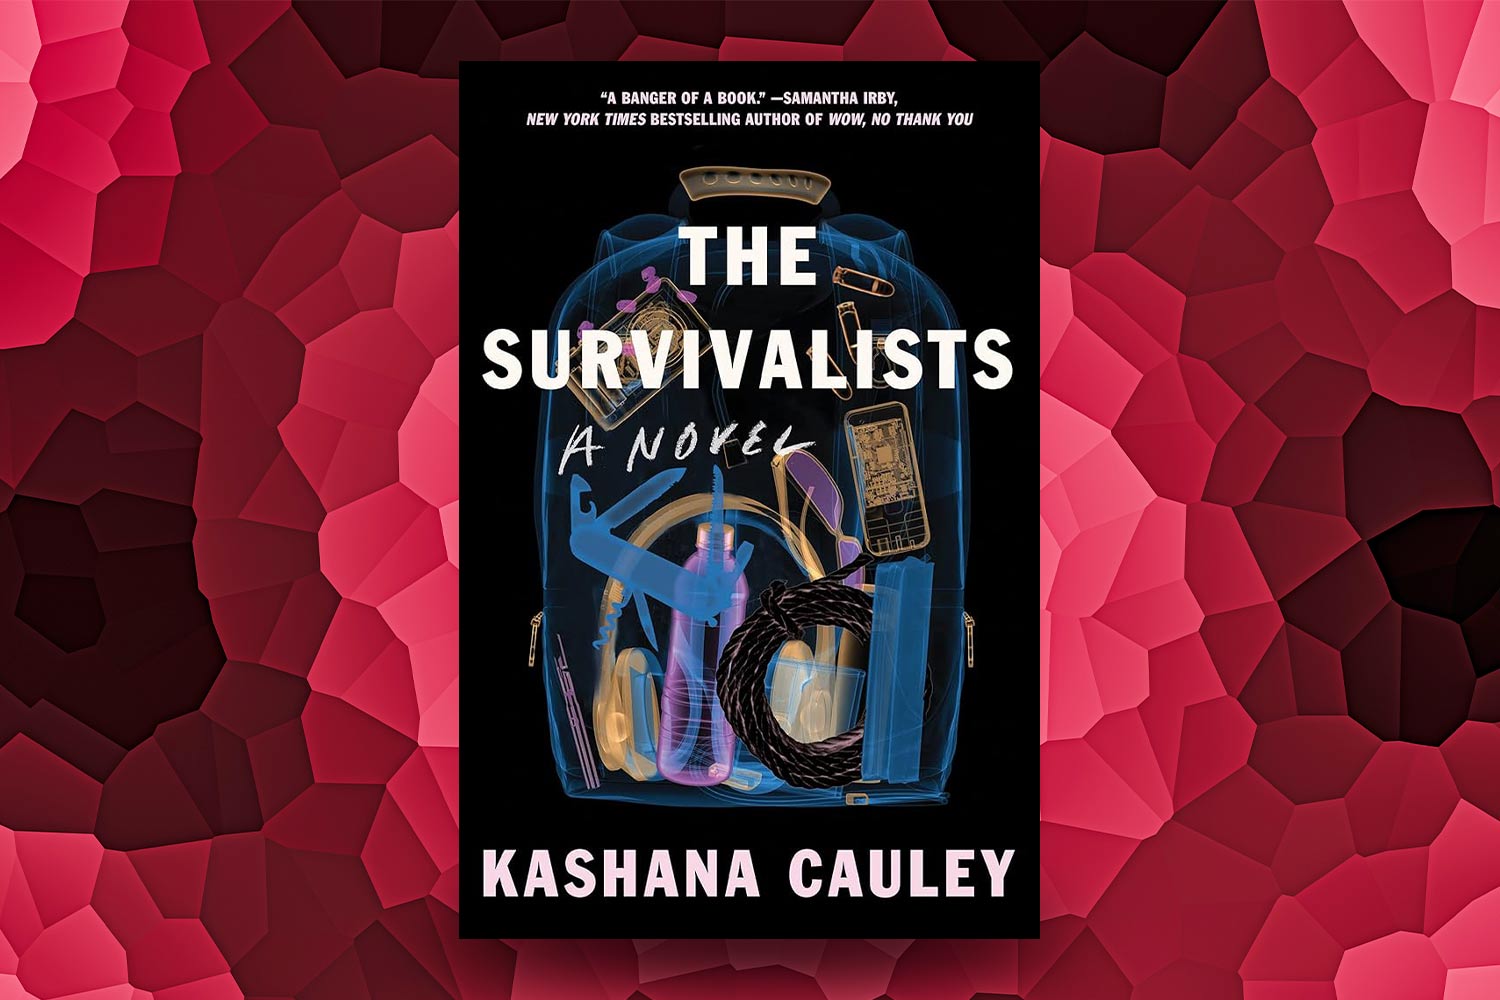 Kashana Cauley, The Survivalists